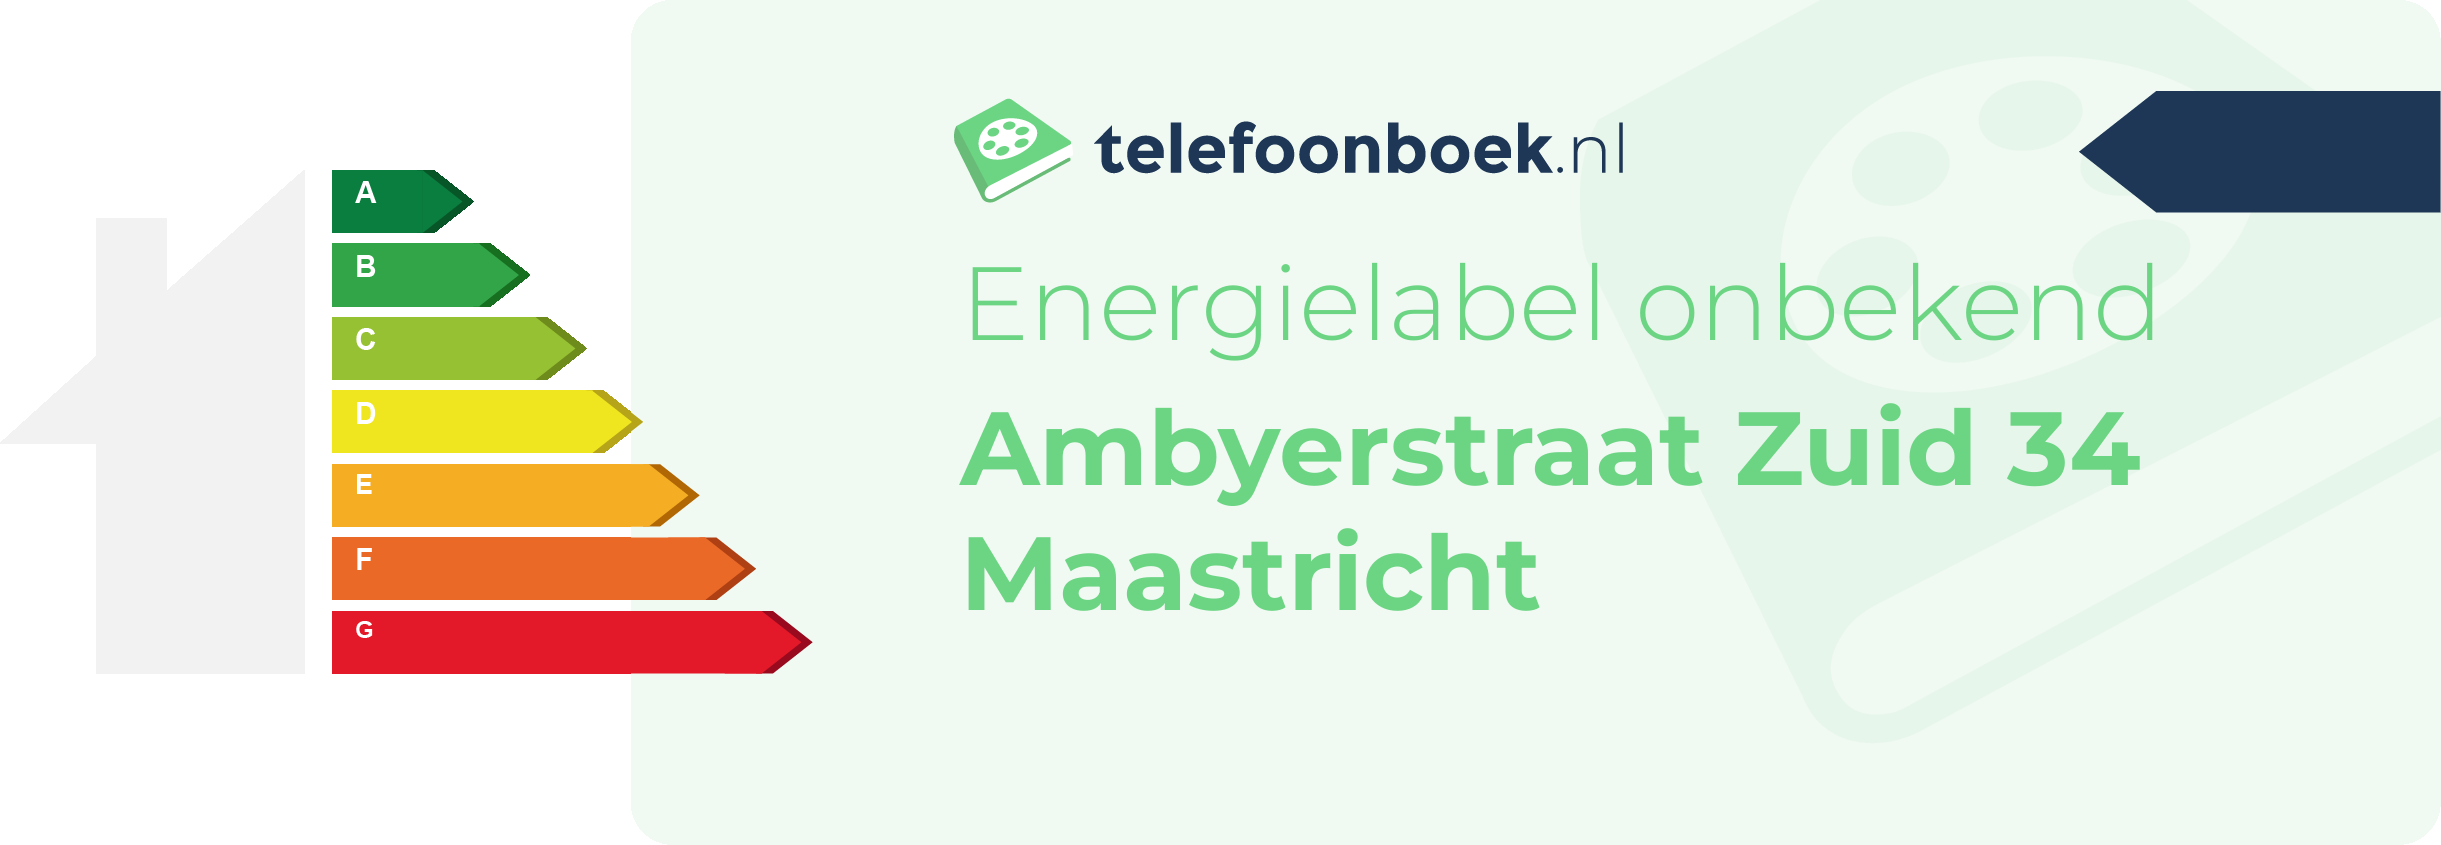 Energielabel Ambyerstraat Zuid 34 Maastricht